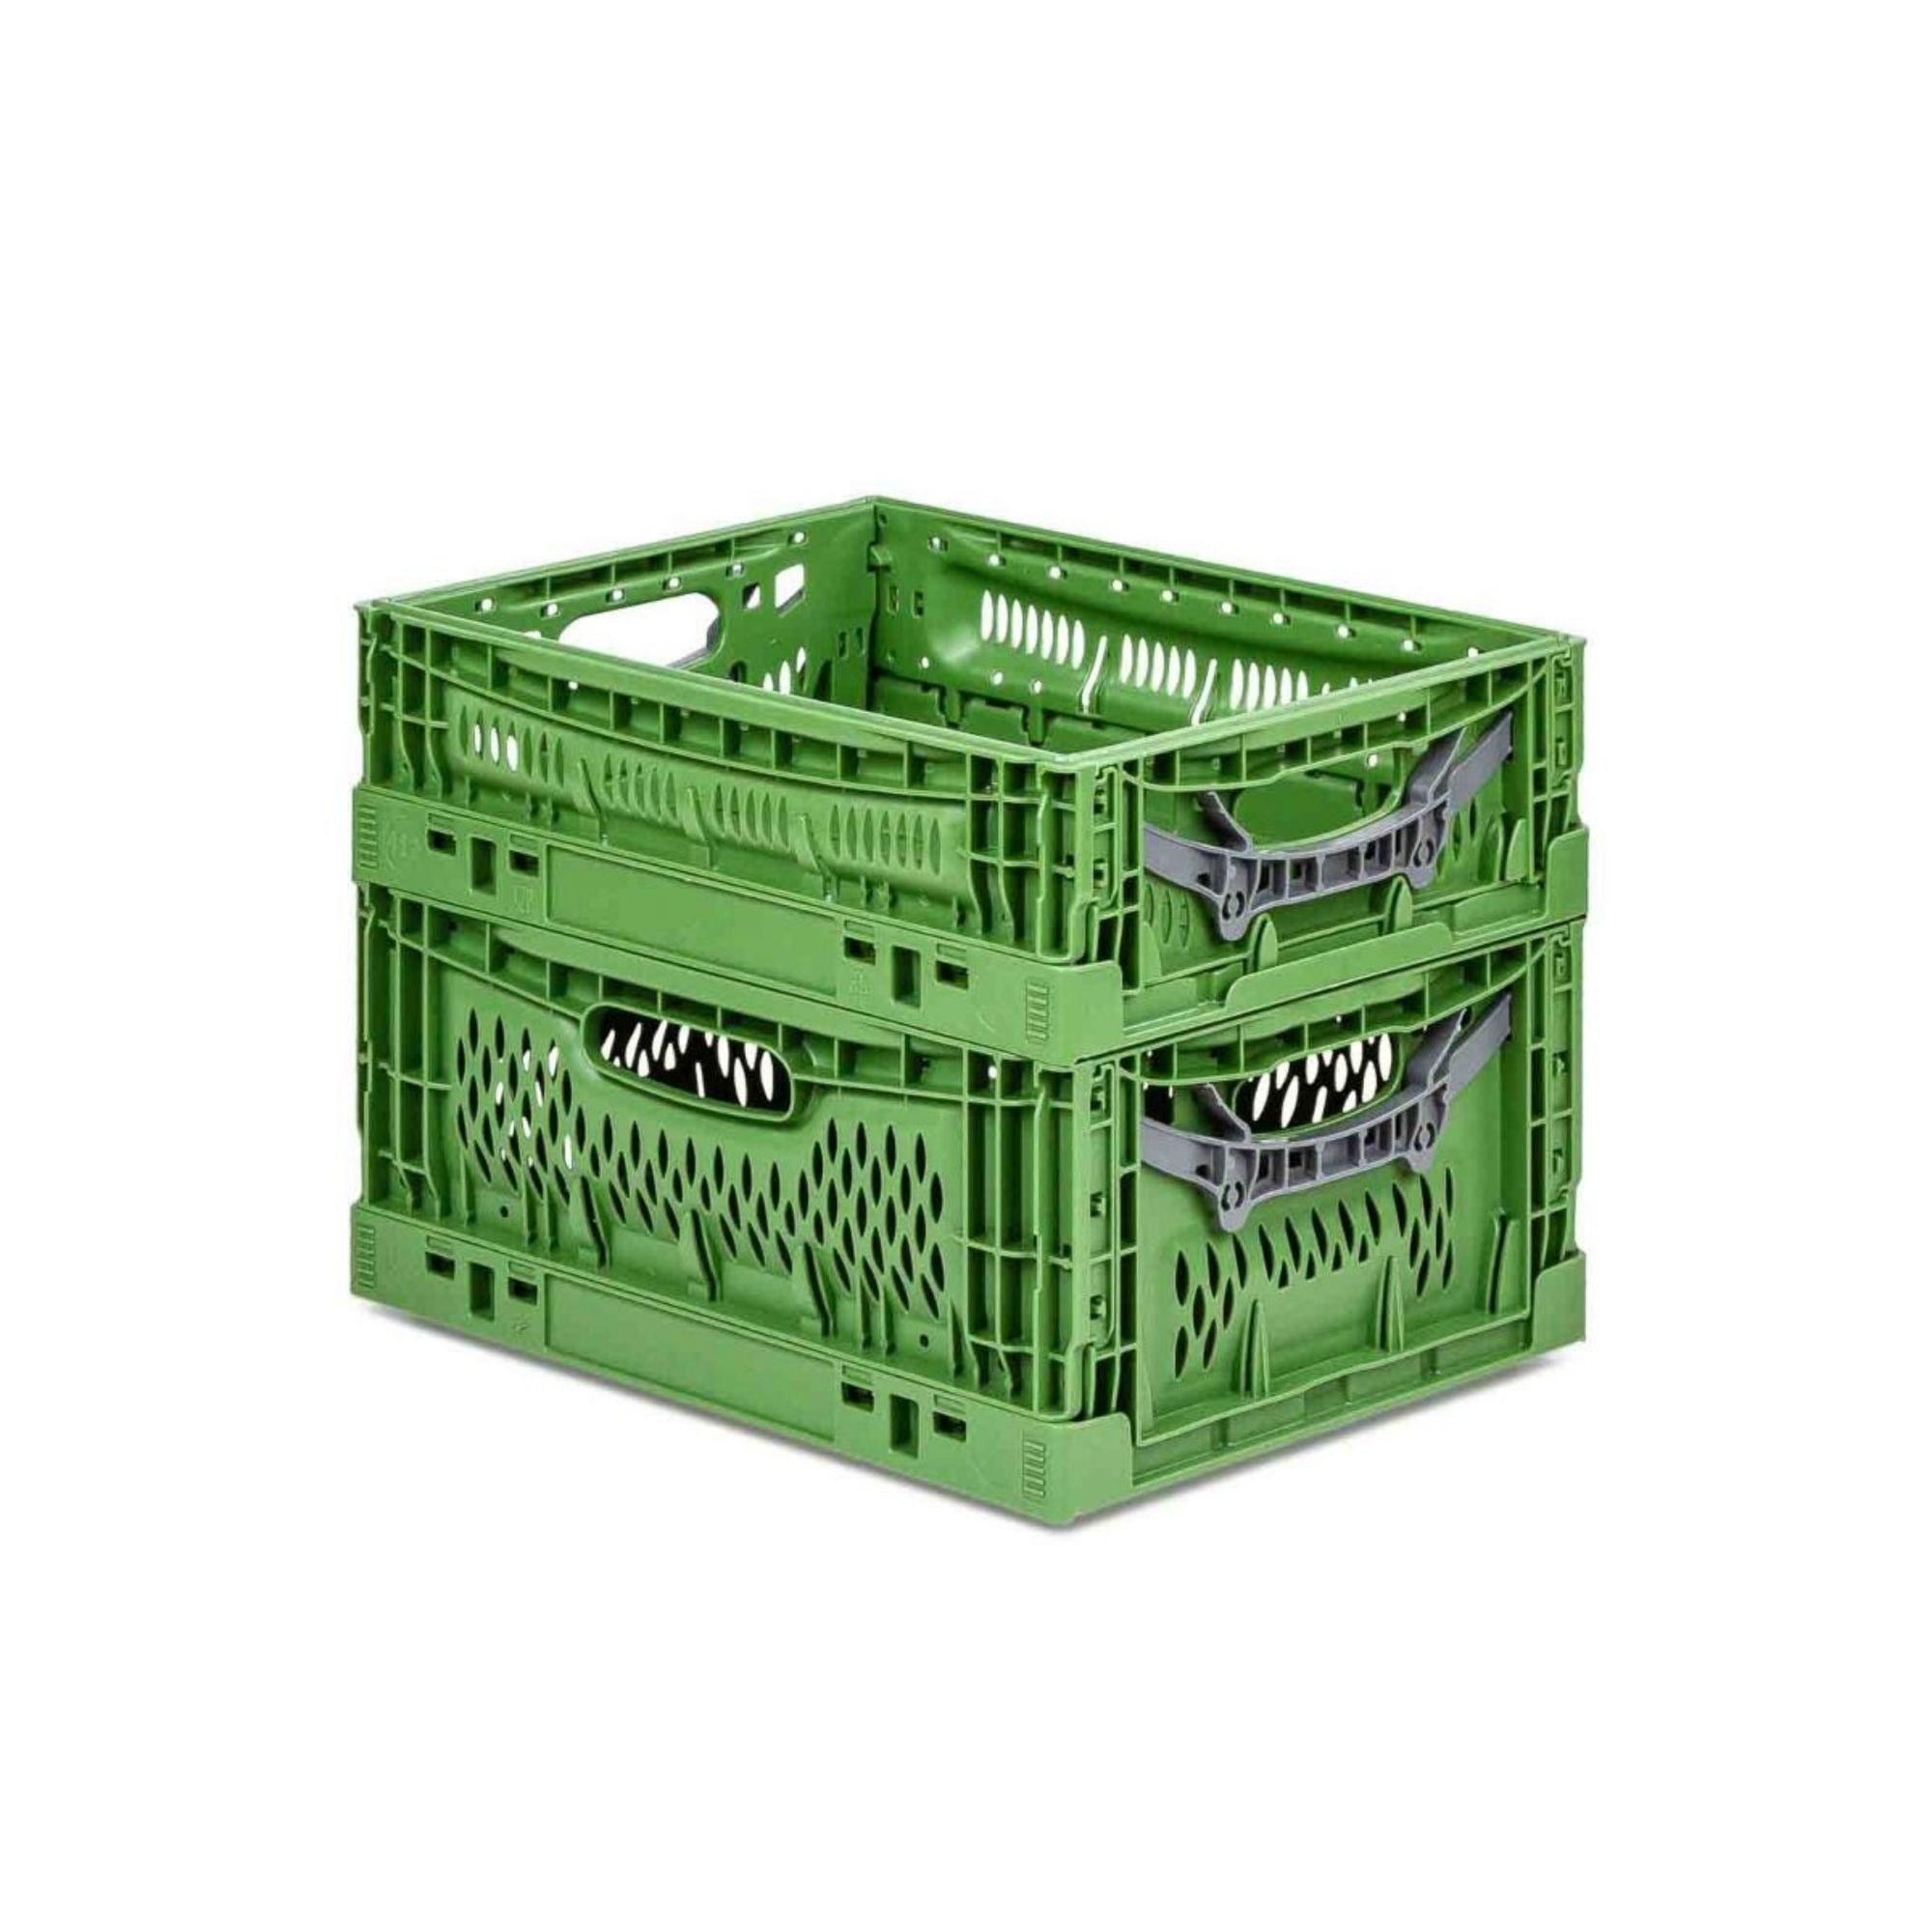 SuperSparSet 20x Stabile Profi-Klappbox Chameleon in Industriequalität | HxBxT 12x40x60cm | 23 Liter | klappbar stapelbar durchbrochen lebensmittelecht | Eurobox Eurobehälter Transportbehälter Stapelbehlter Faltbox